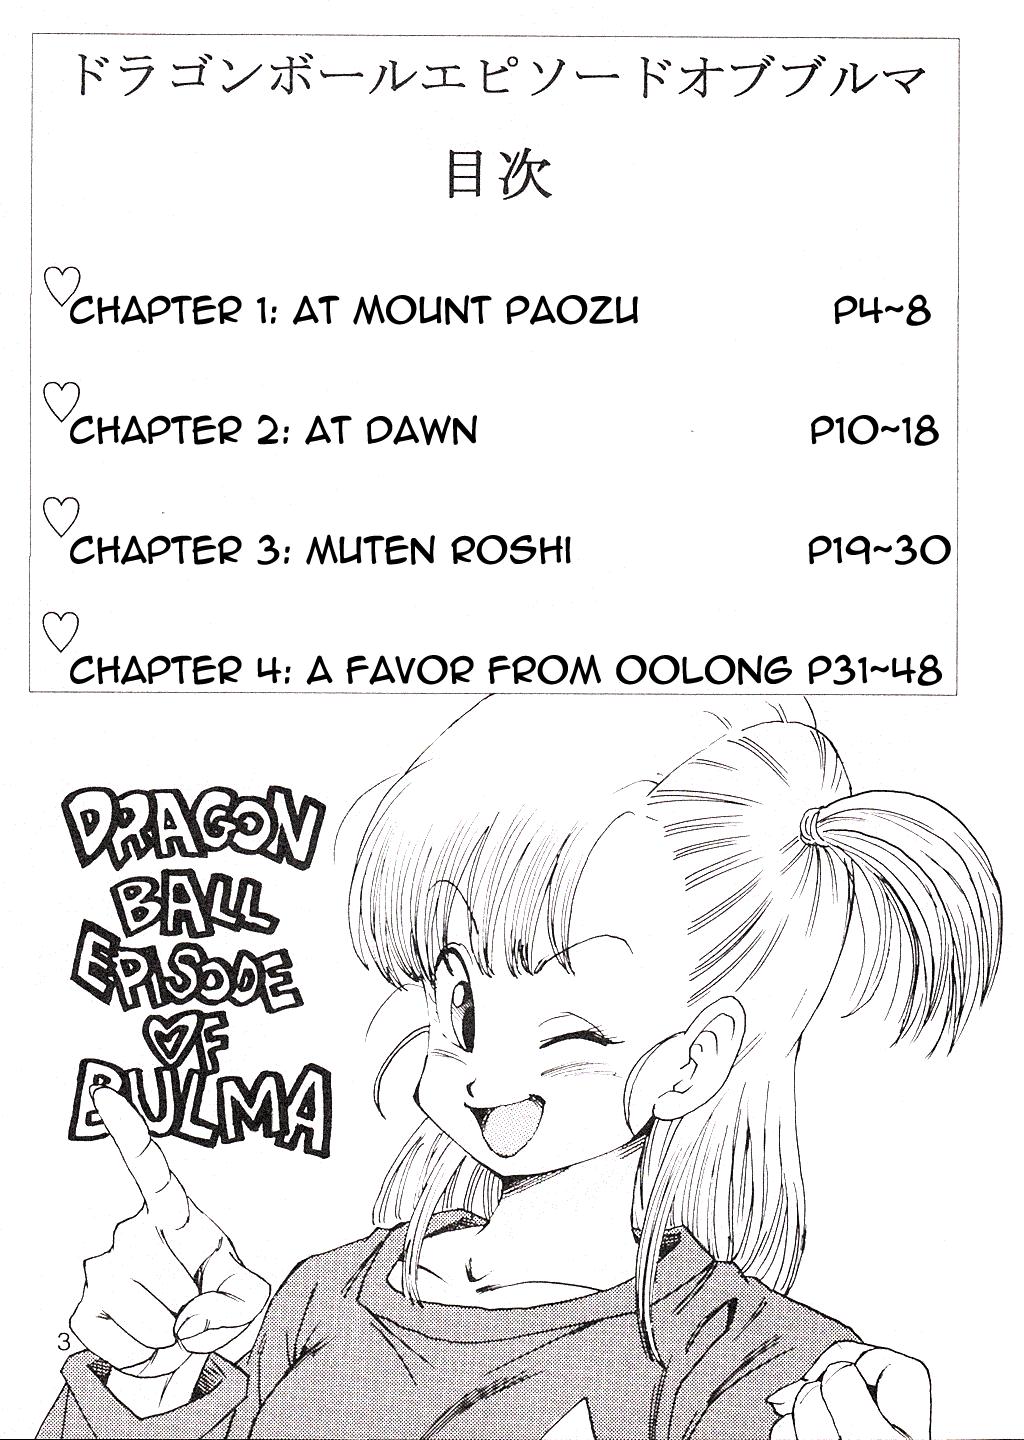 Nasty Dragon Ball EB Episode of Bulma - Dragon ball Publico - Page 4